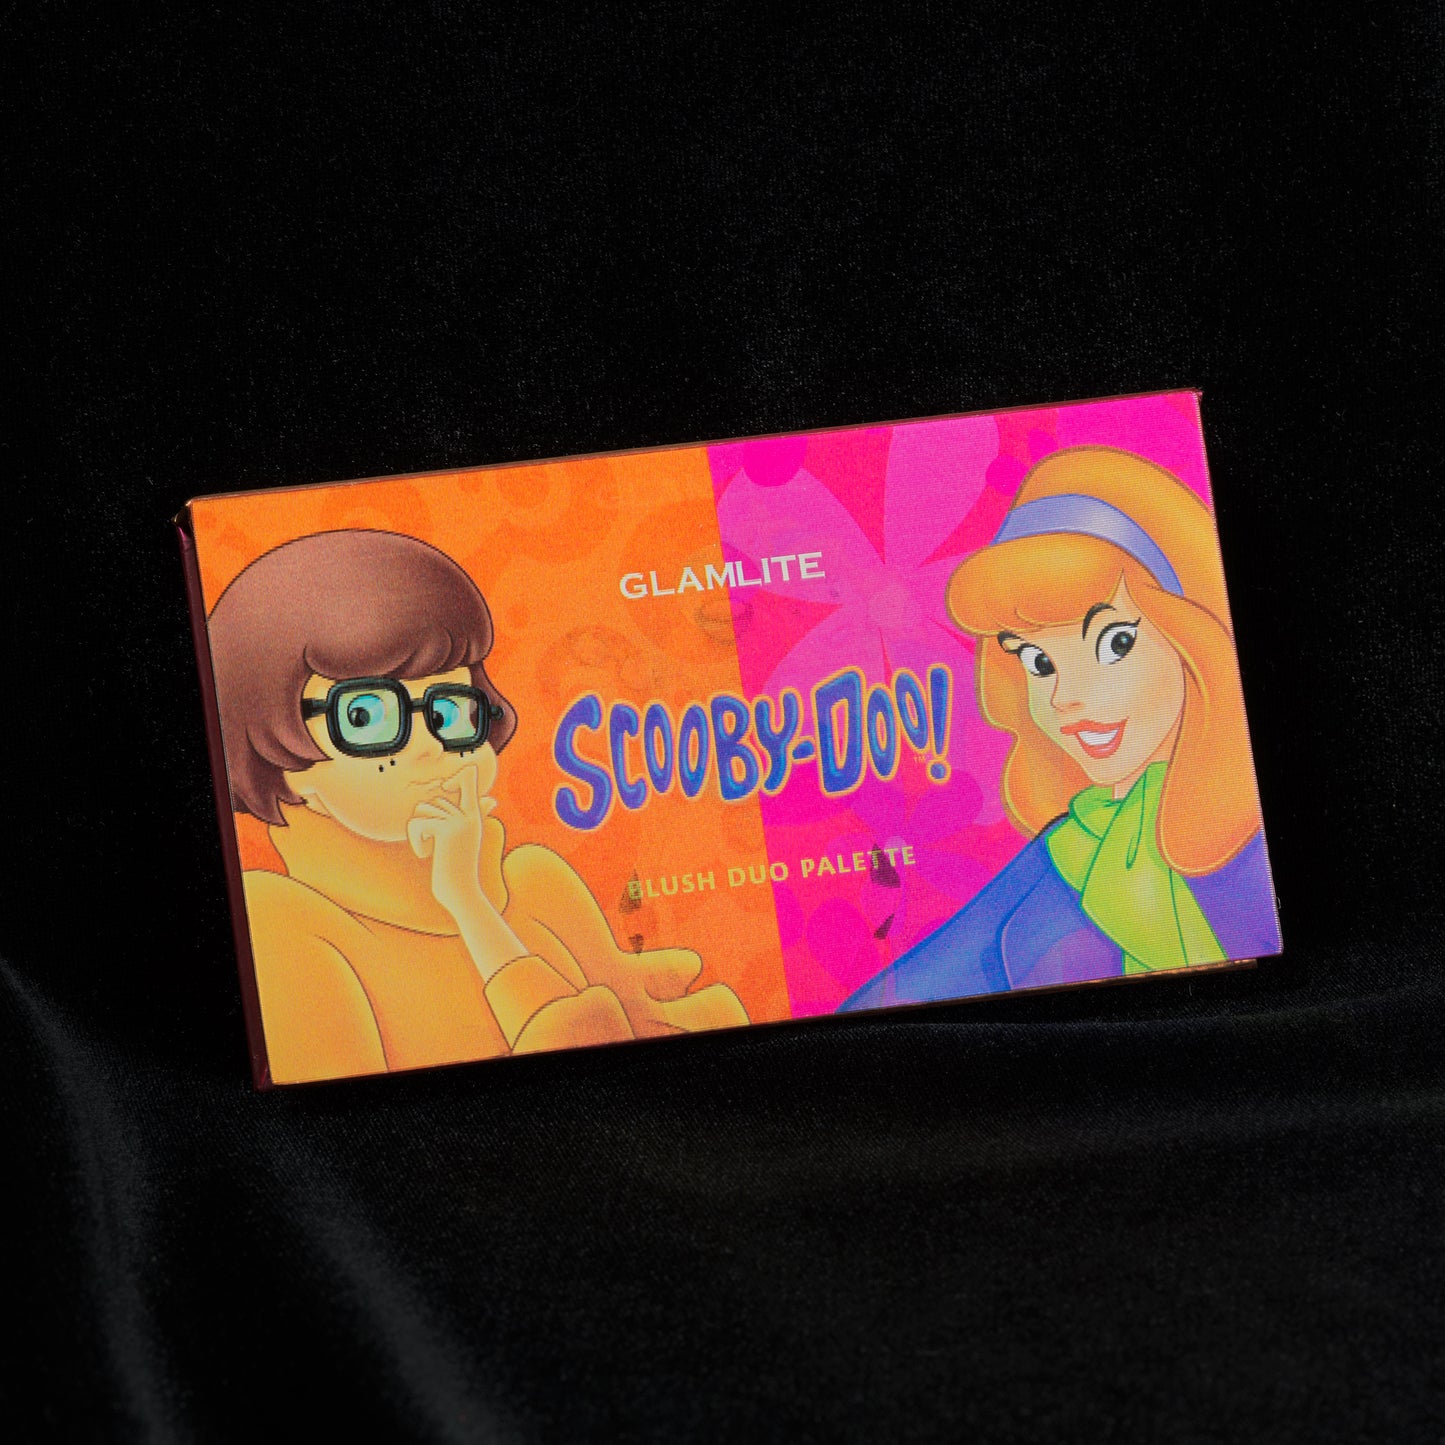 Scooby-Doo™ x Glamlite blush duo